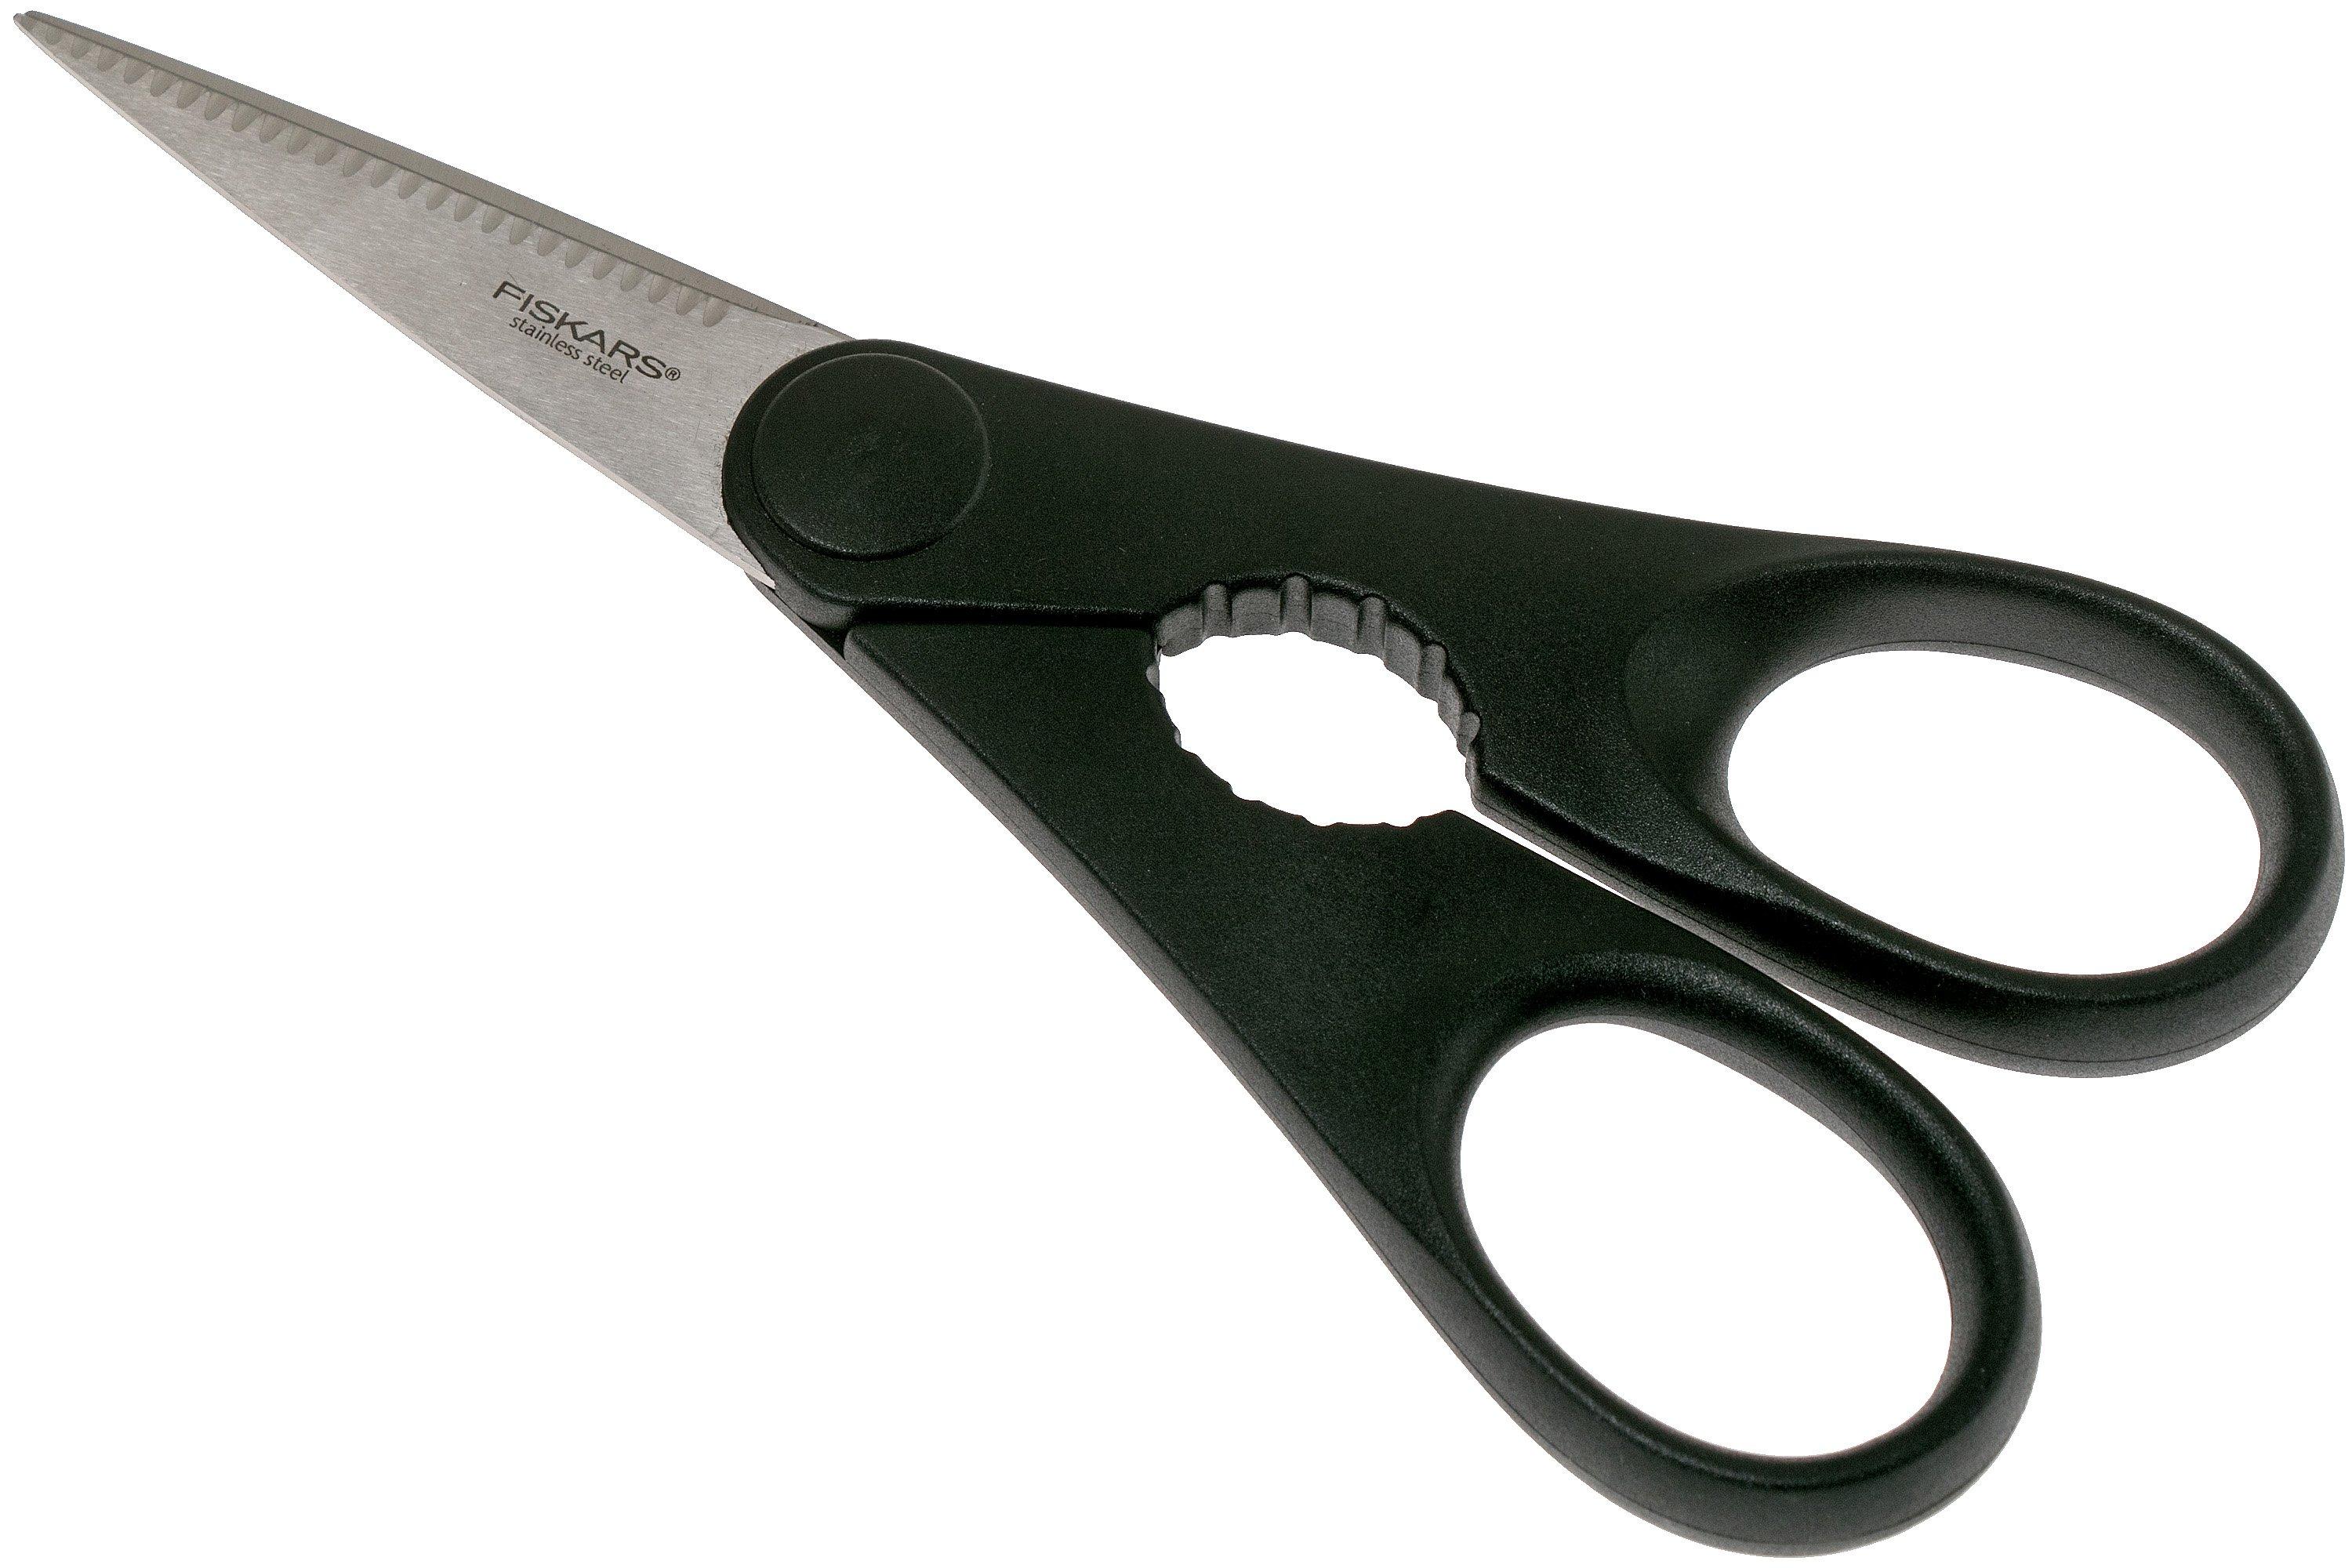 Fiskars kitchen scissors, herb scissors and poultry shears